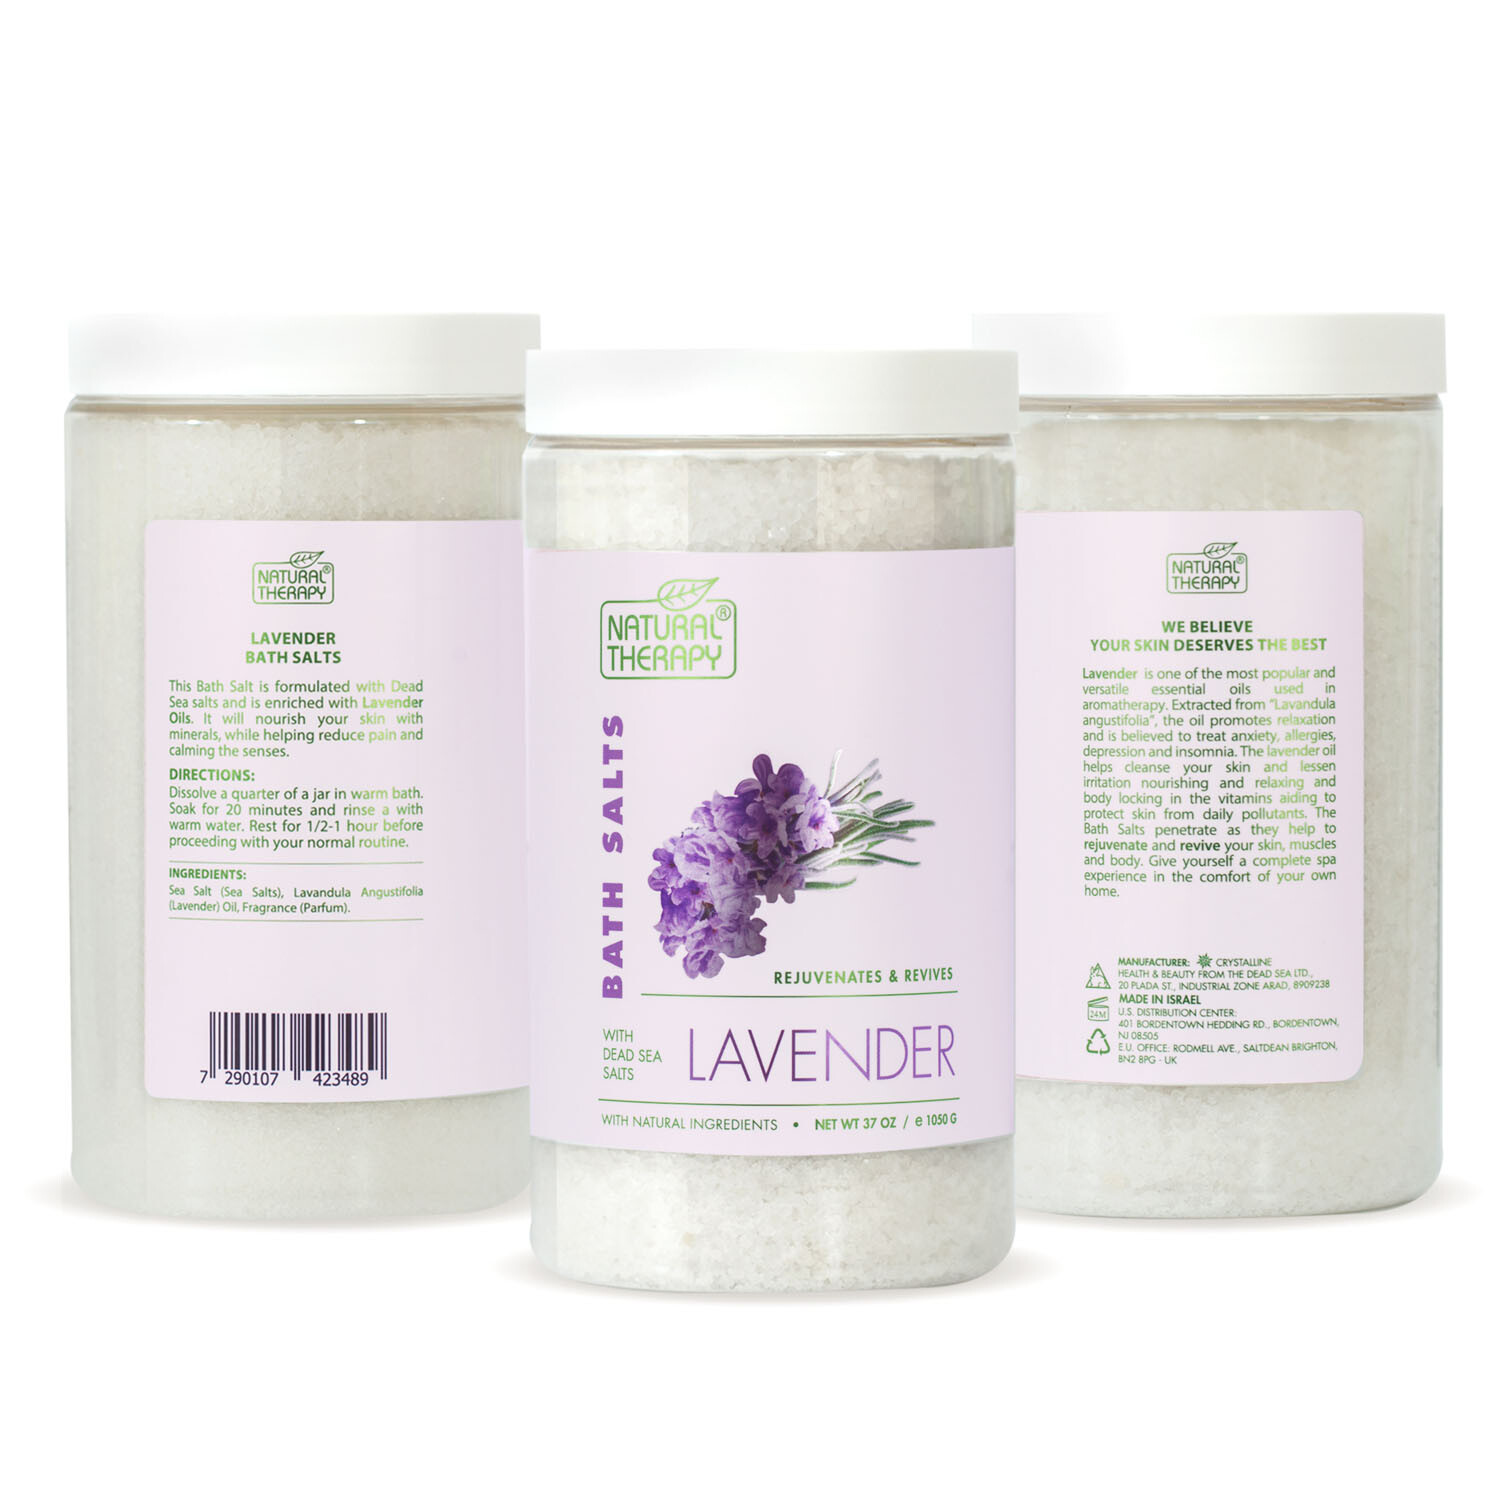 Natural Therapy Lavender Bath Salt 1.05kg Image